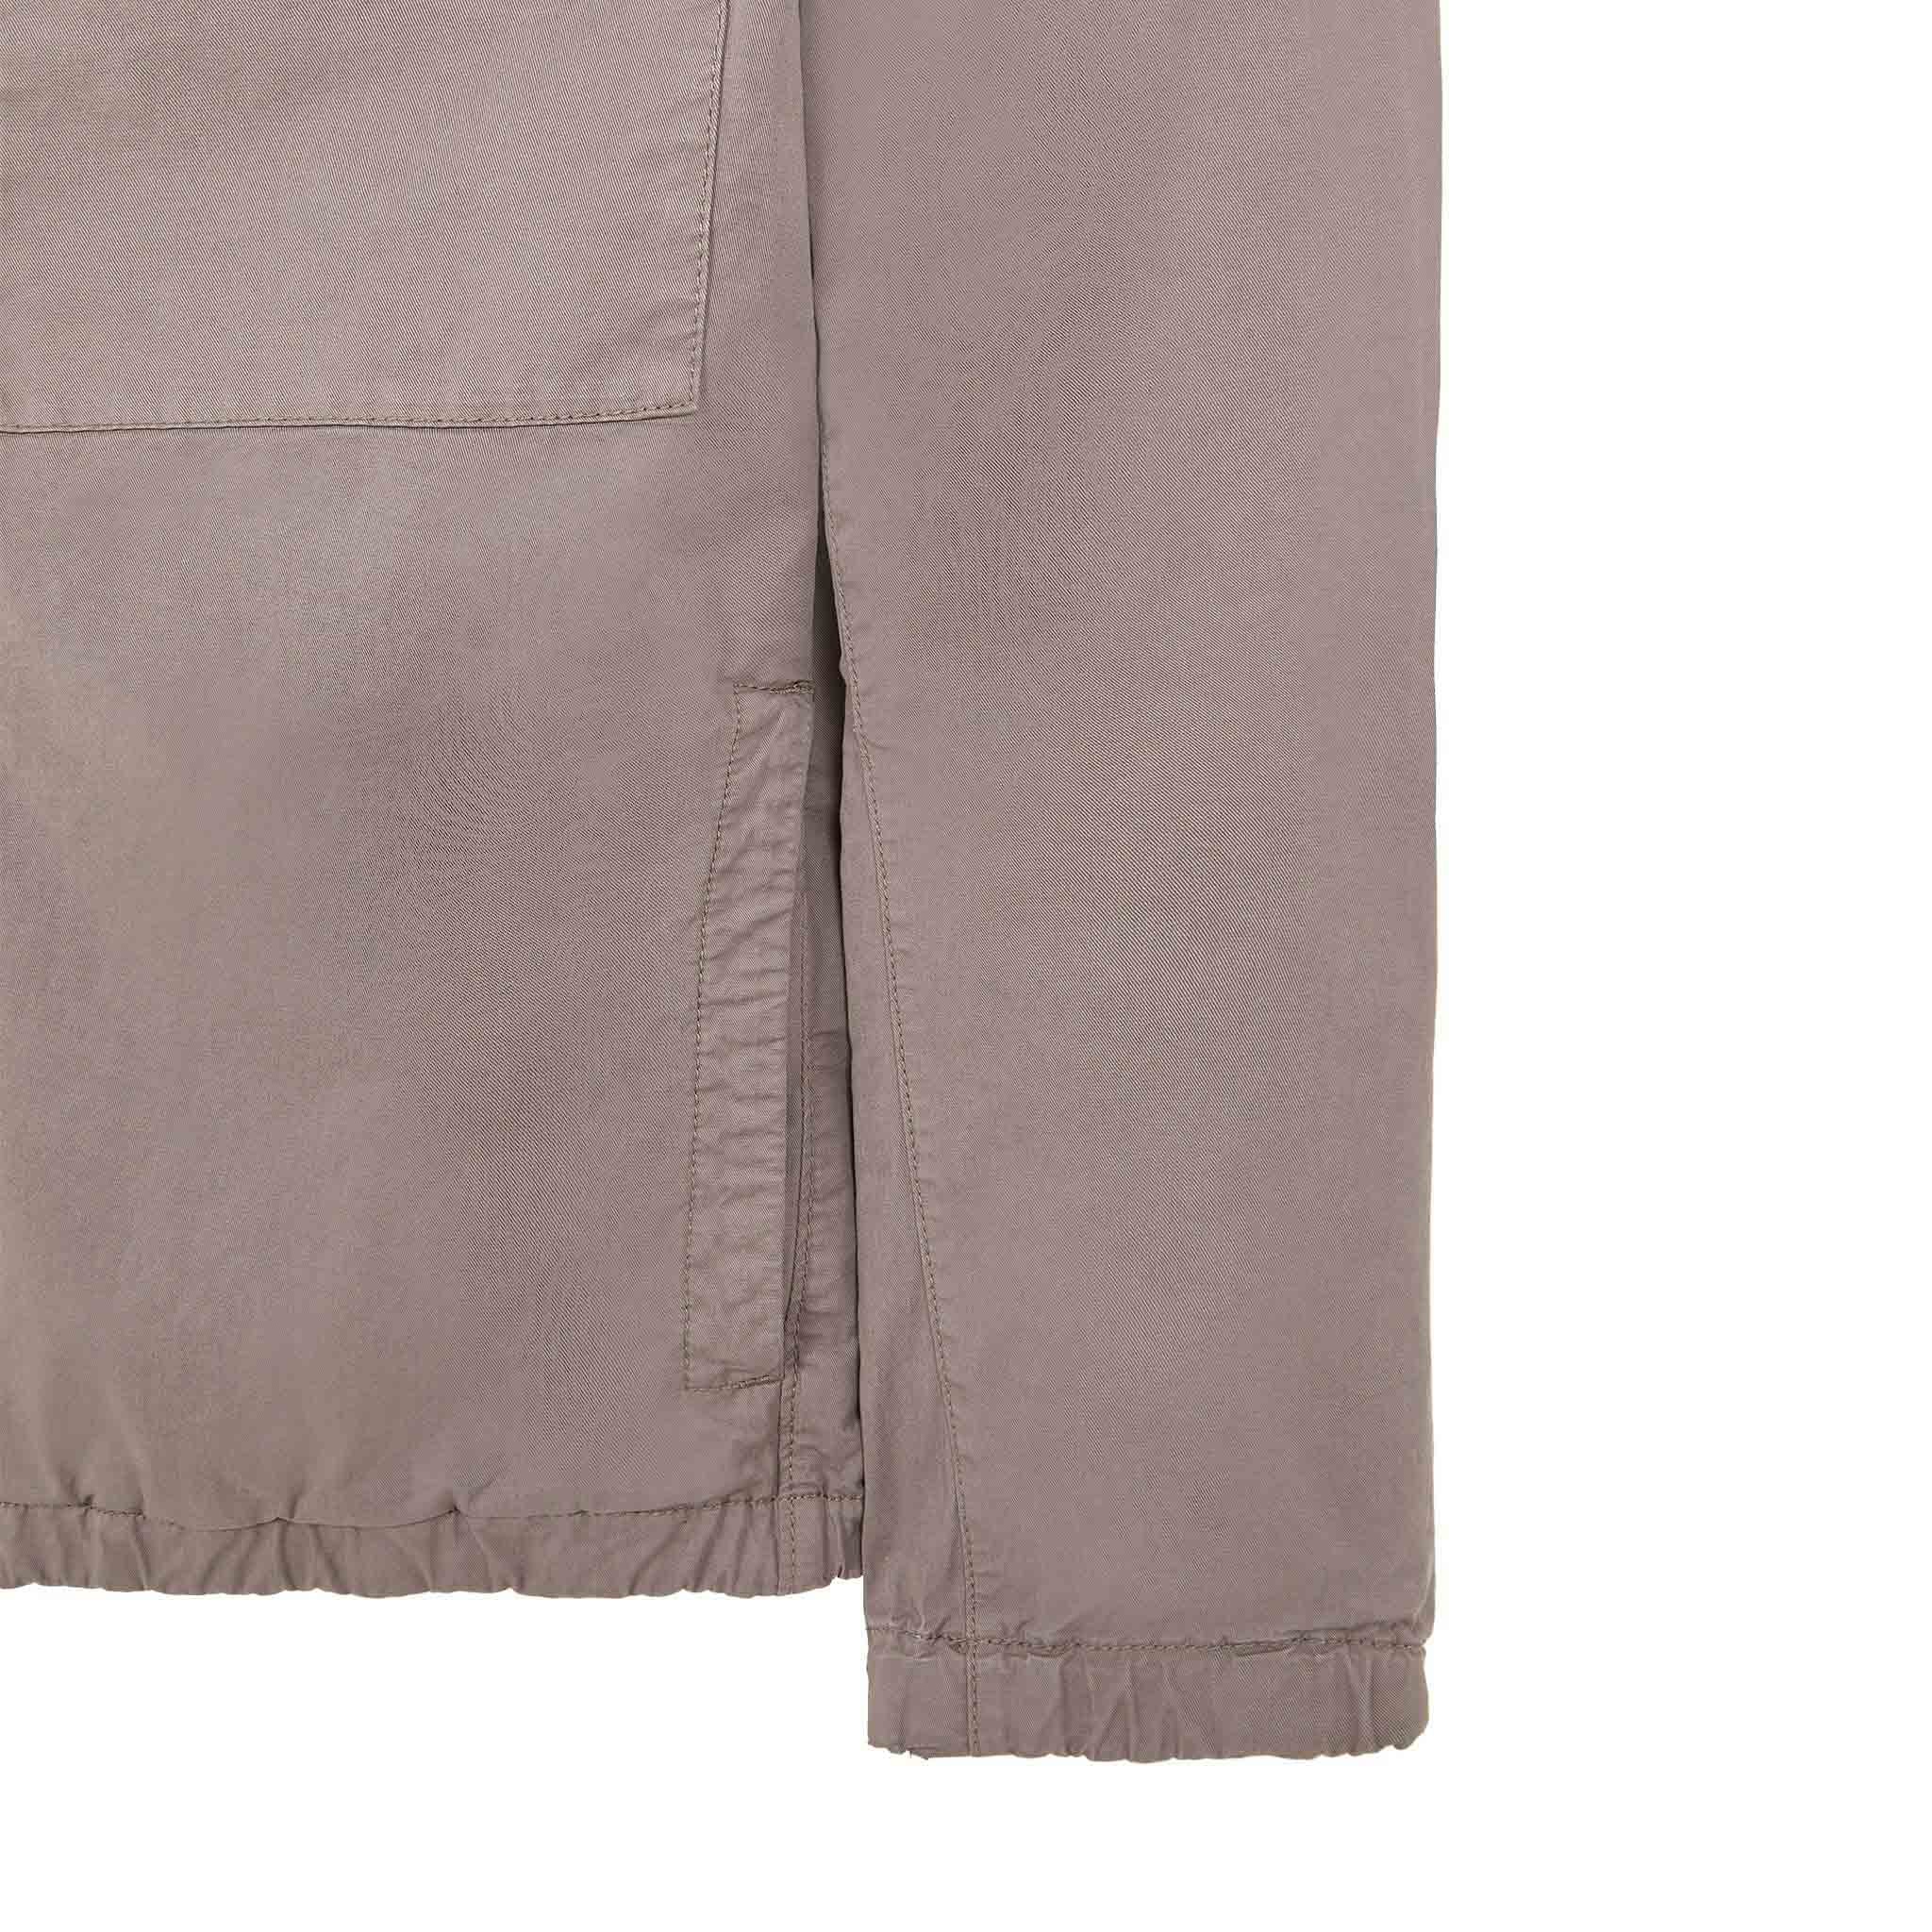 Stone Island Supima Cotton Twill Stretch-TC Hooded Jacket in Dove Grey